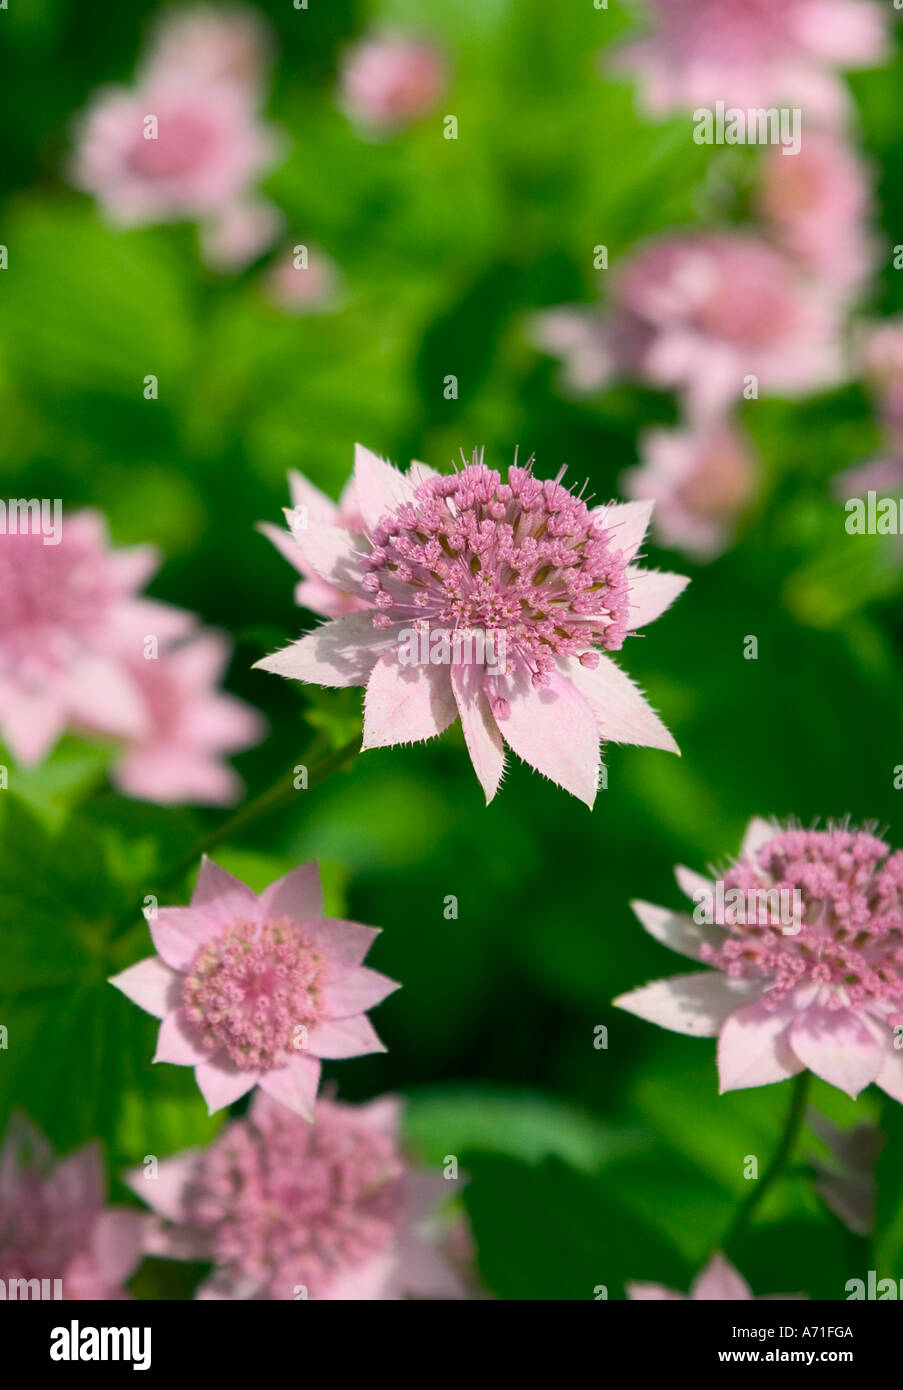 Flowering Astrantia / Masterwort shot in natural environment Stock Photo